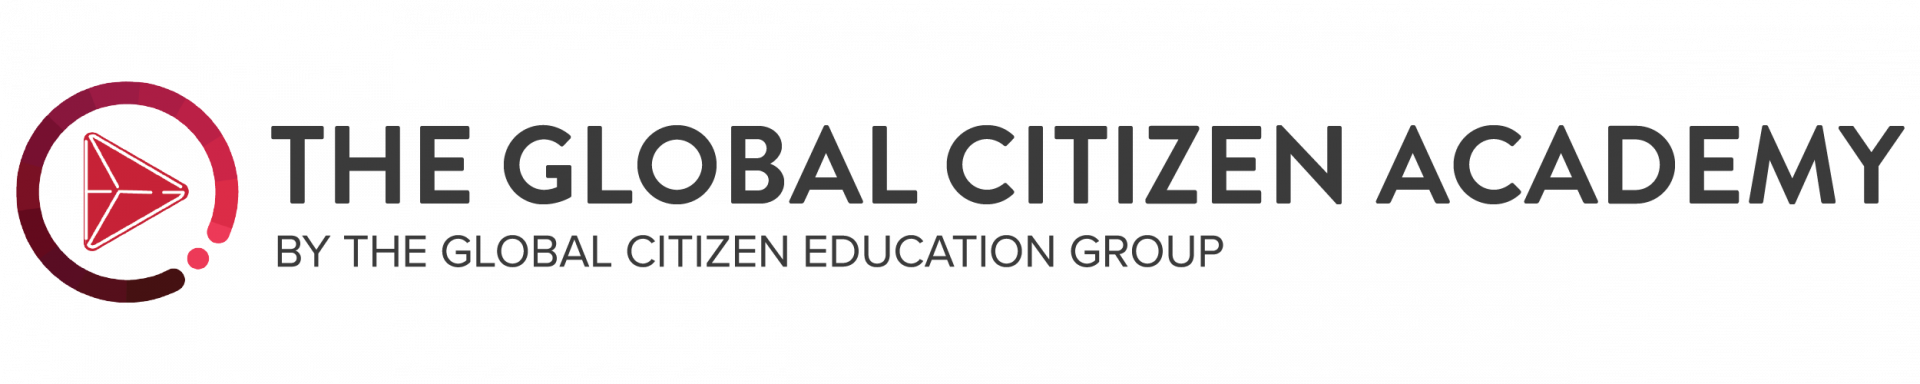 World Citizen Academy logo